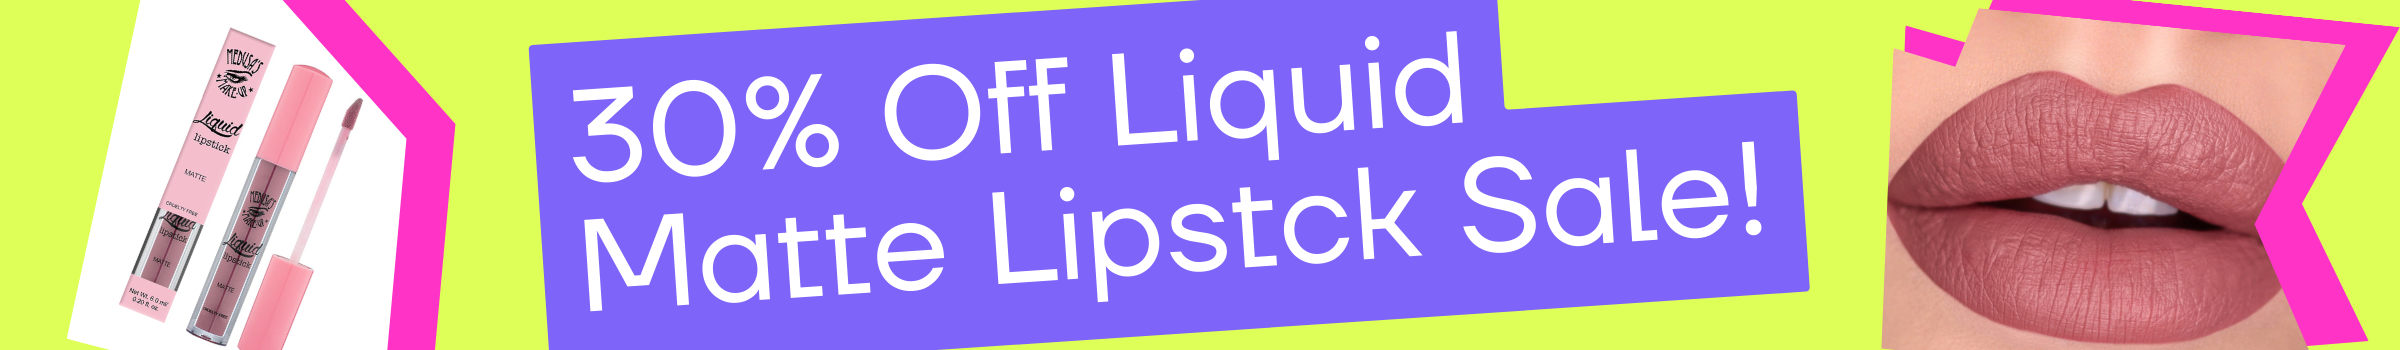 30% off liquid matte lipstick sale